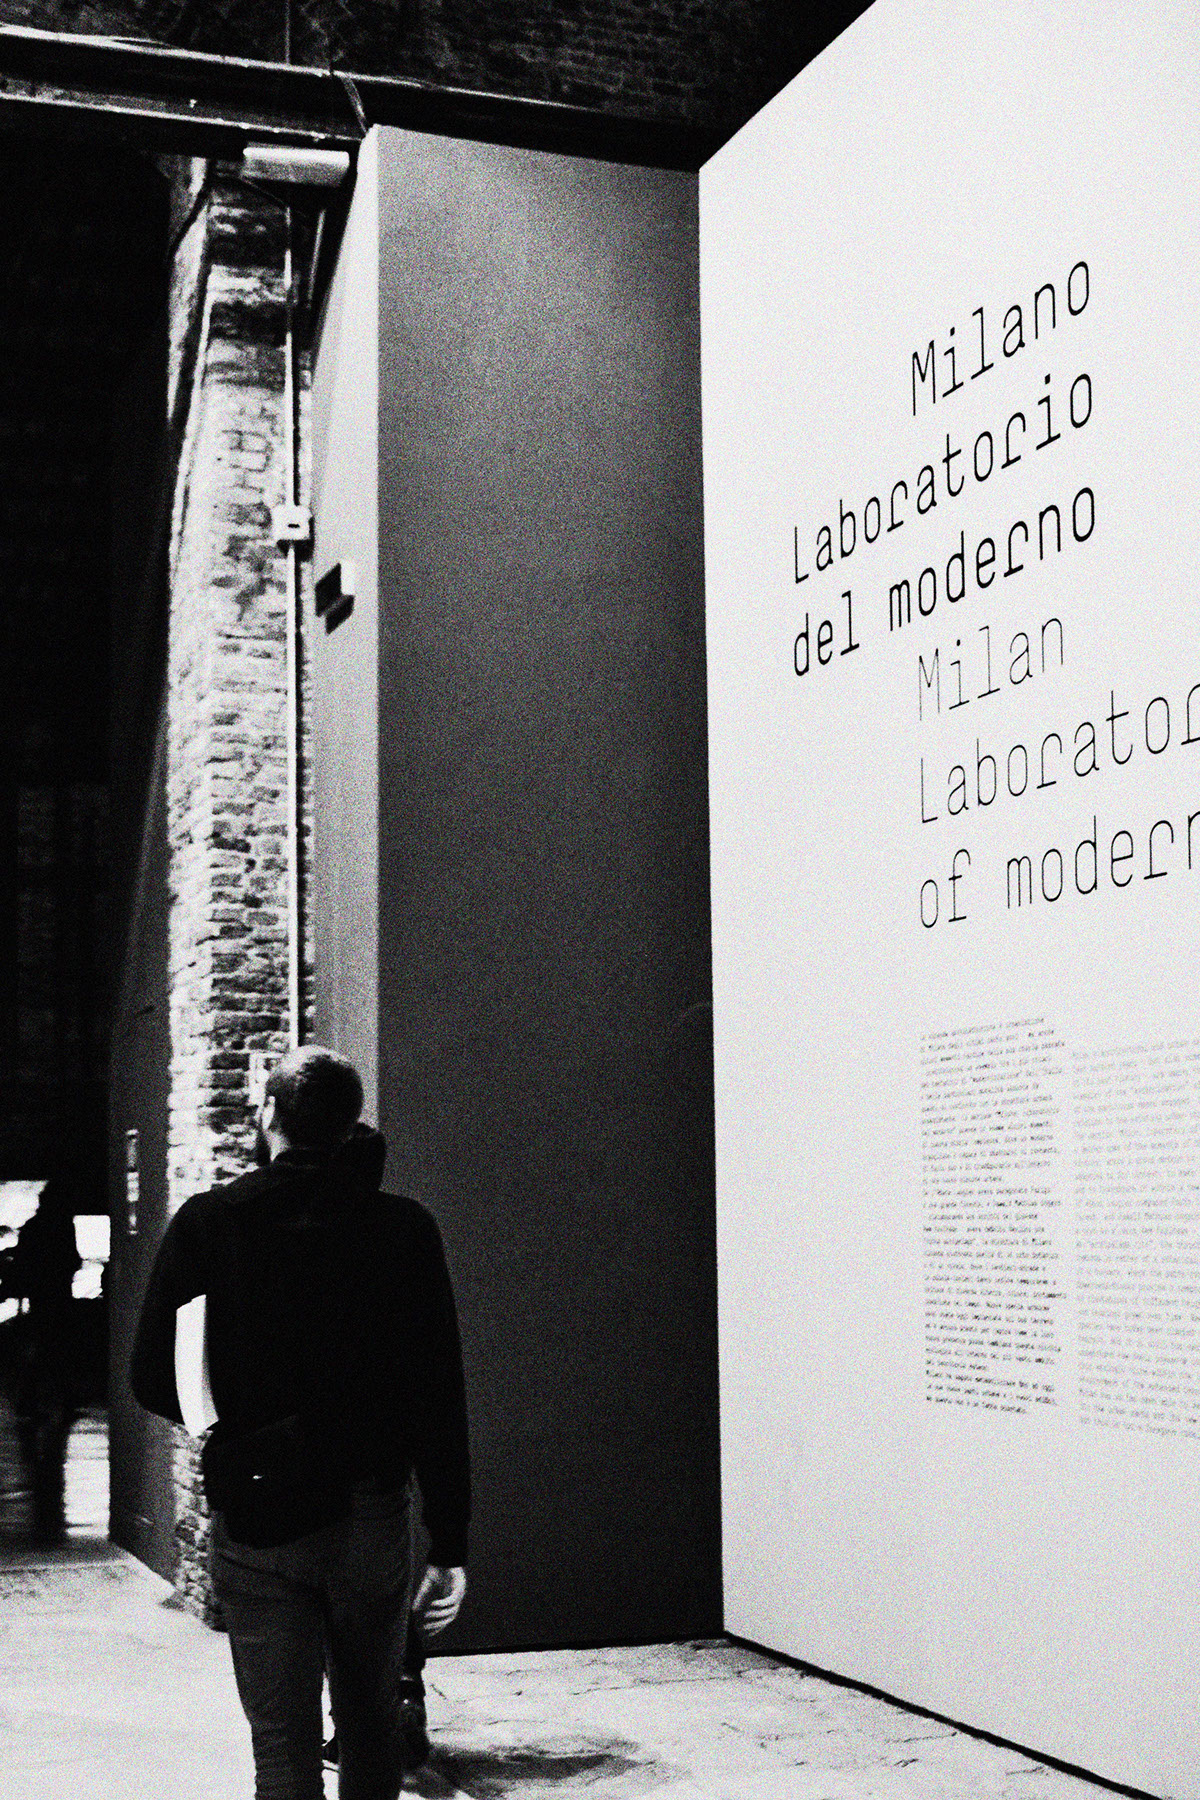 Venice Biennale 2014